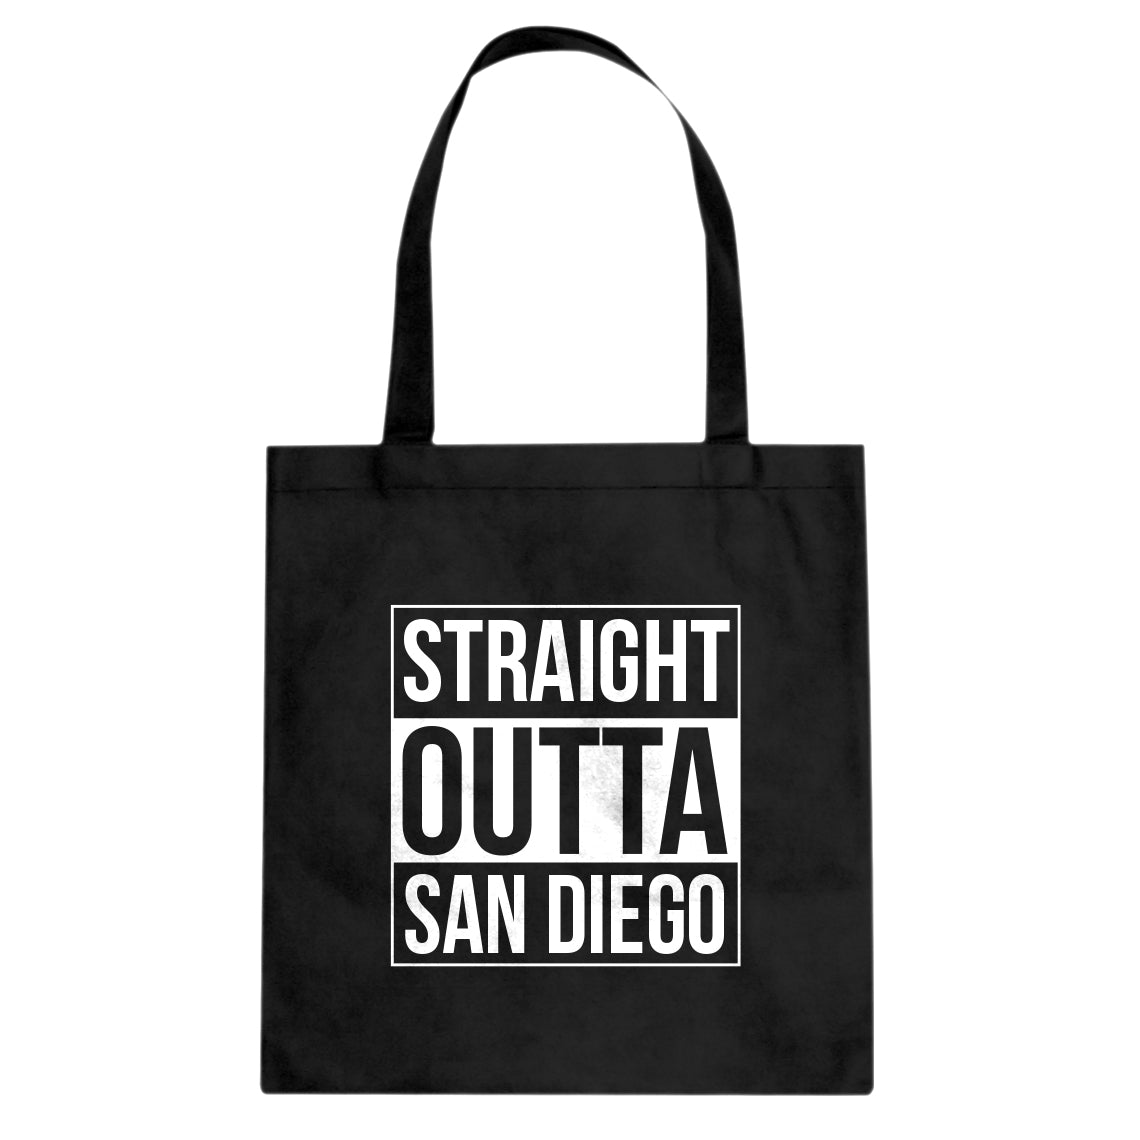 Straight Outta San Diego Cotton Canvas Tote Bag